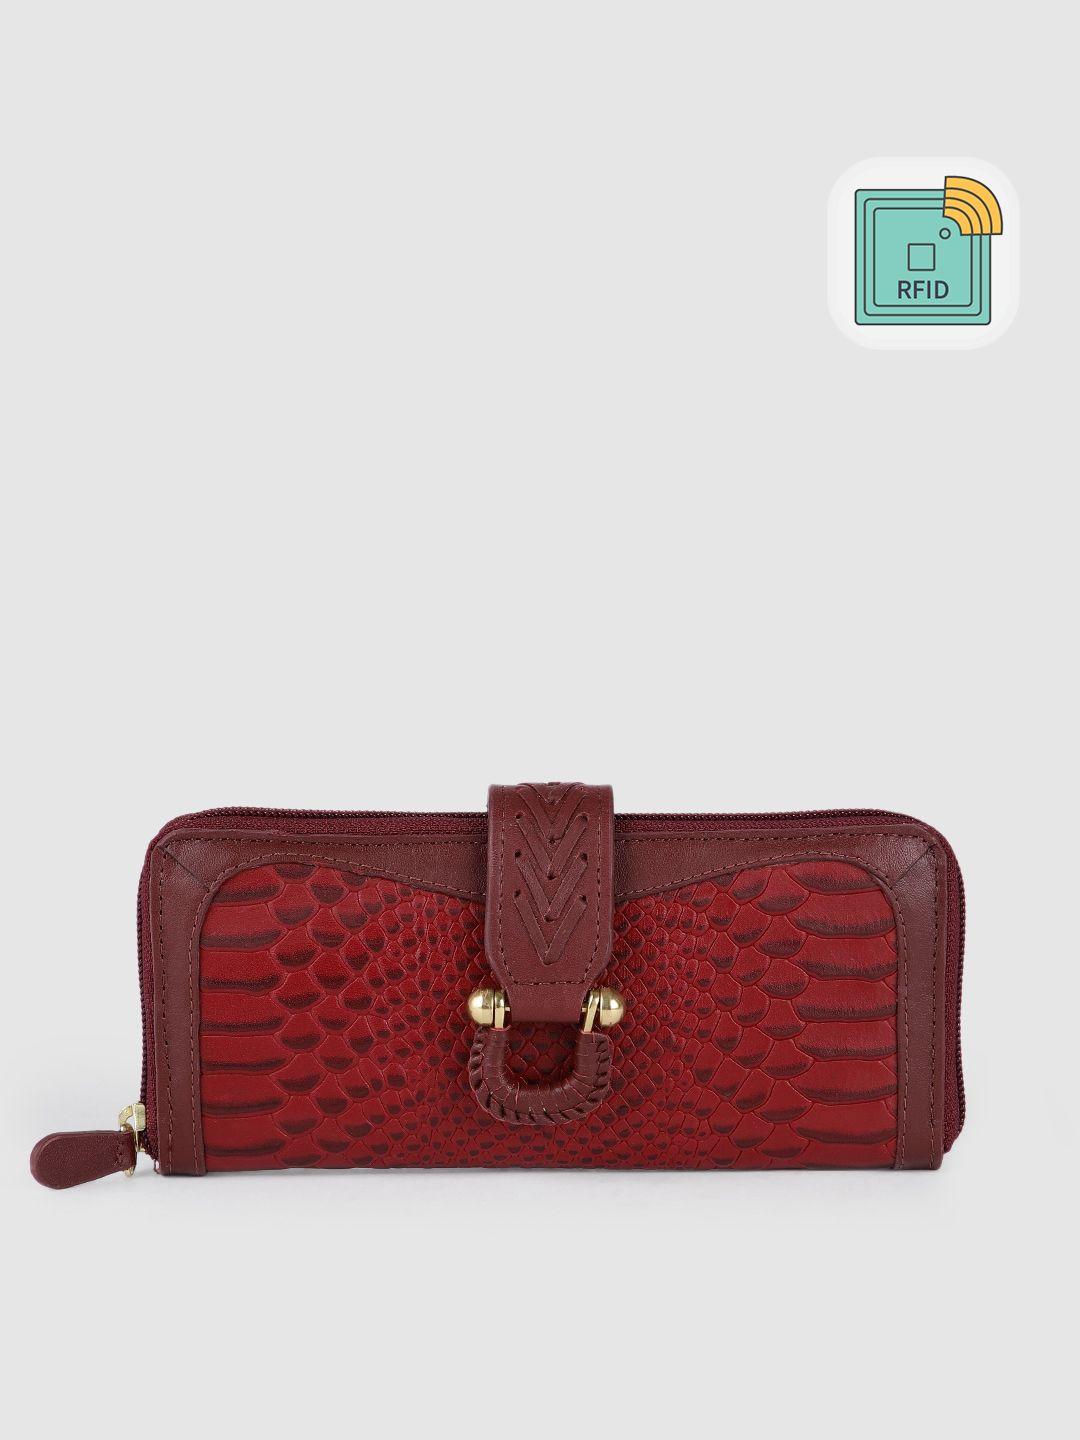 hidesign women rust red & coffee brown snakeskin handcrafted leather zip around wallet